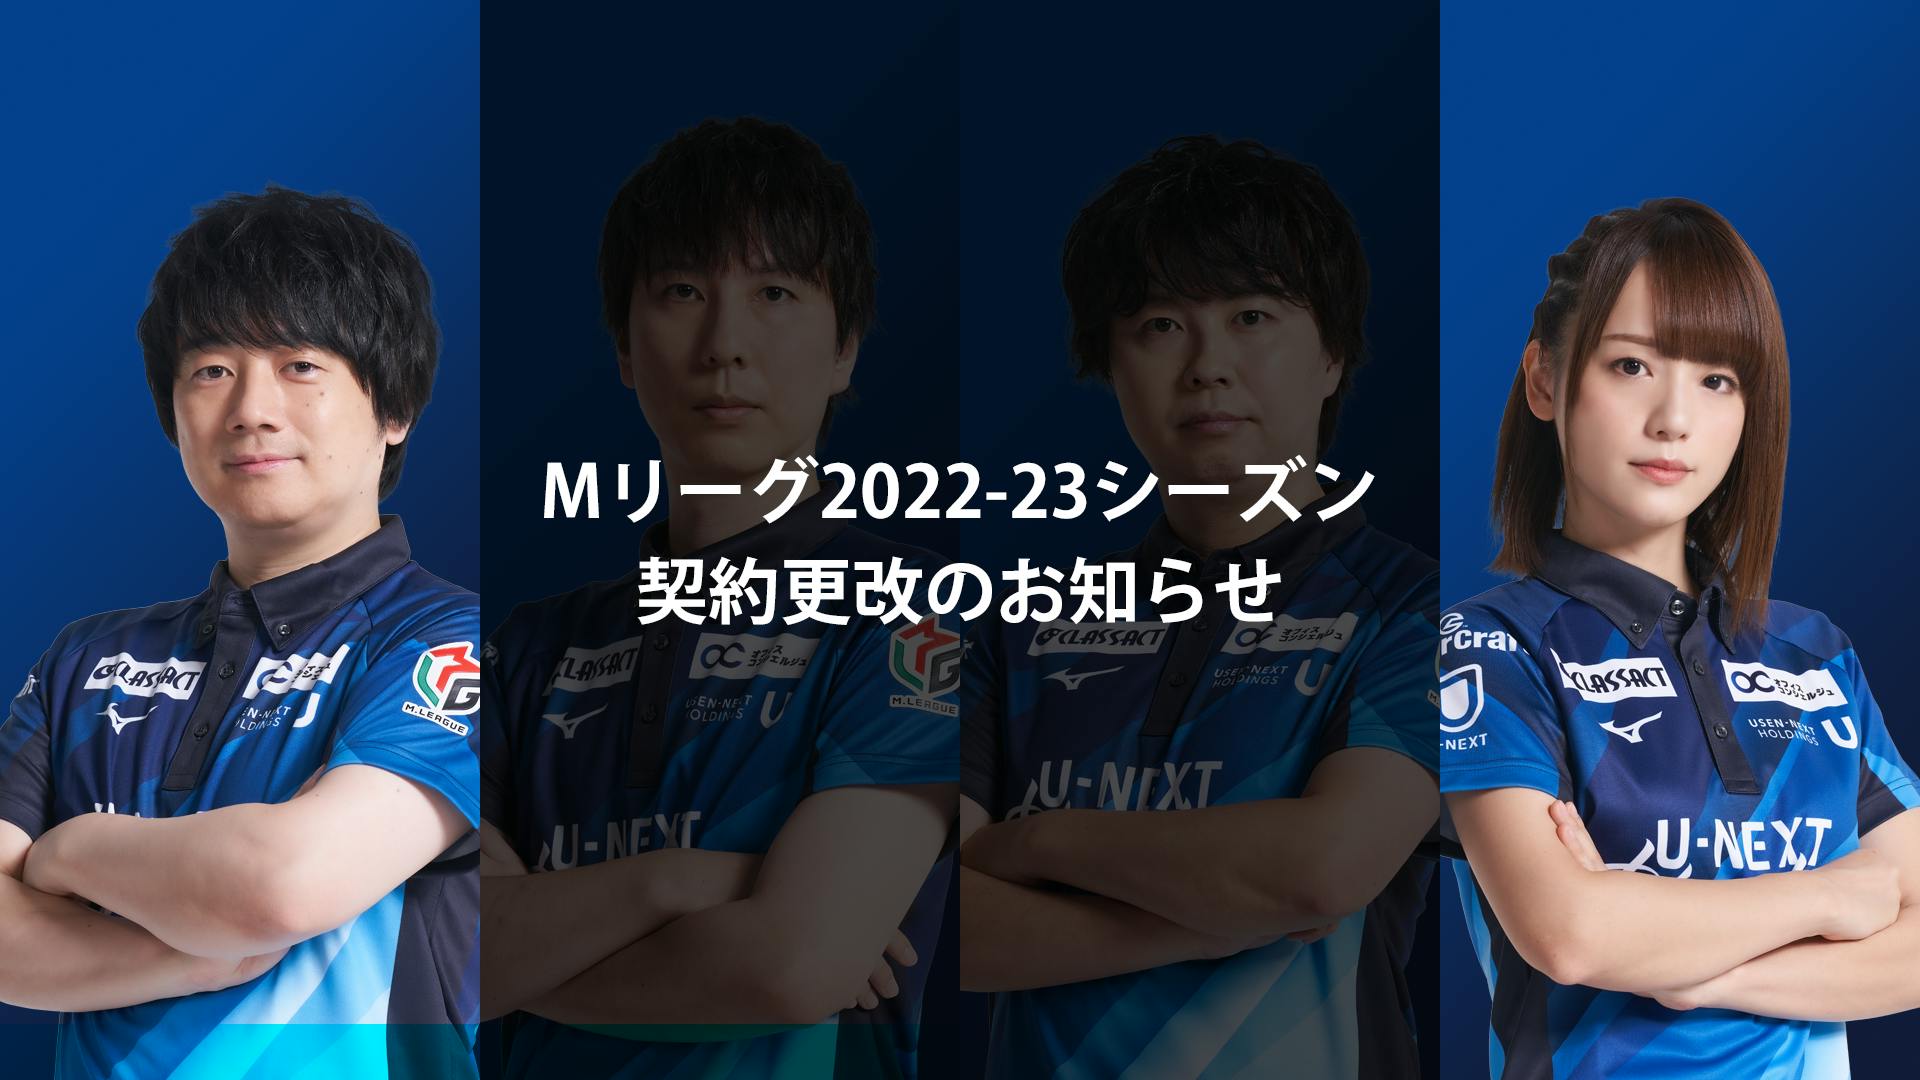 「Mリーグ」2022-23シーズンに向けて、小林選手・瑞原選手と契約を更改、朝倉選手・石橋選手とは契約を満了